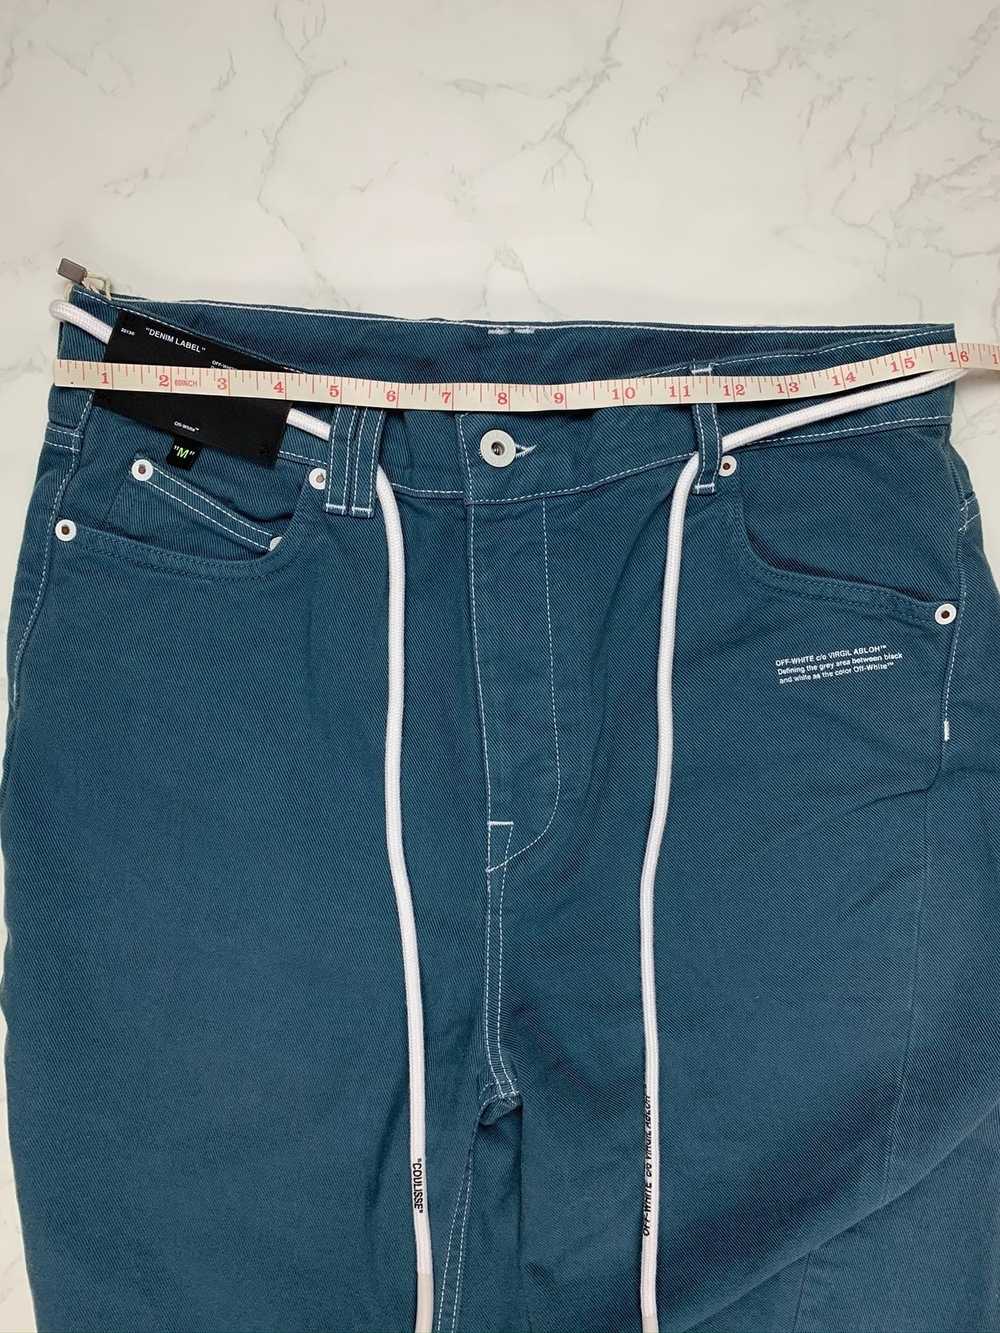 Off-White Rare Off-White Blue Denim Jeans - image 2